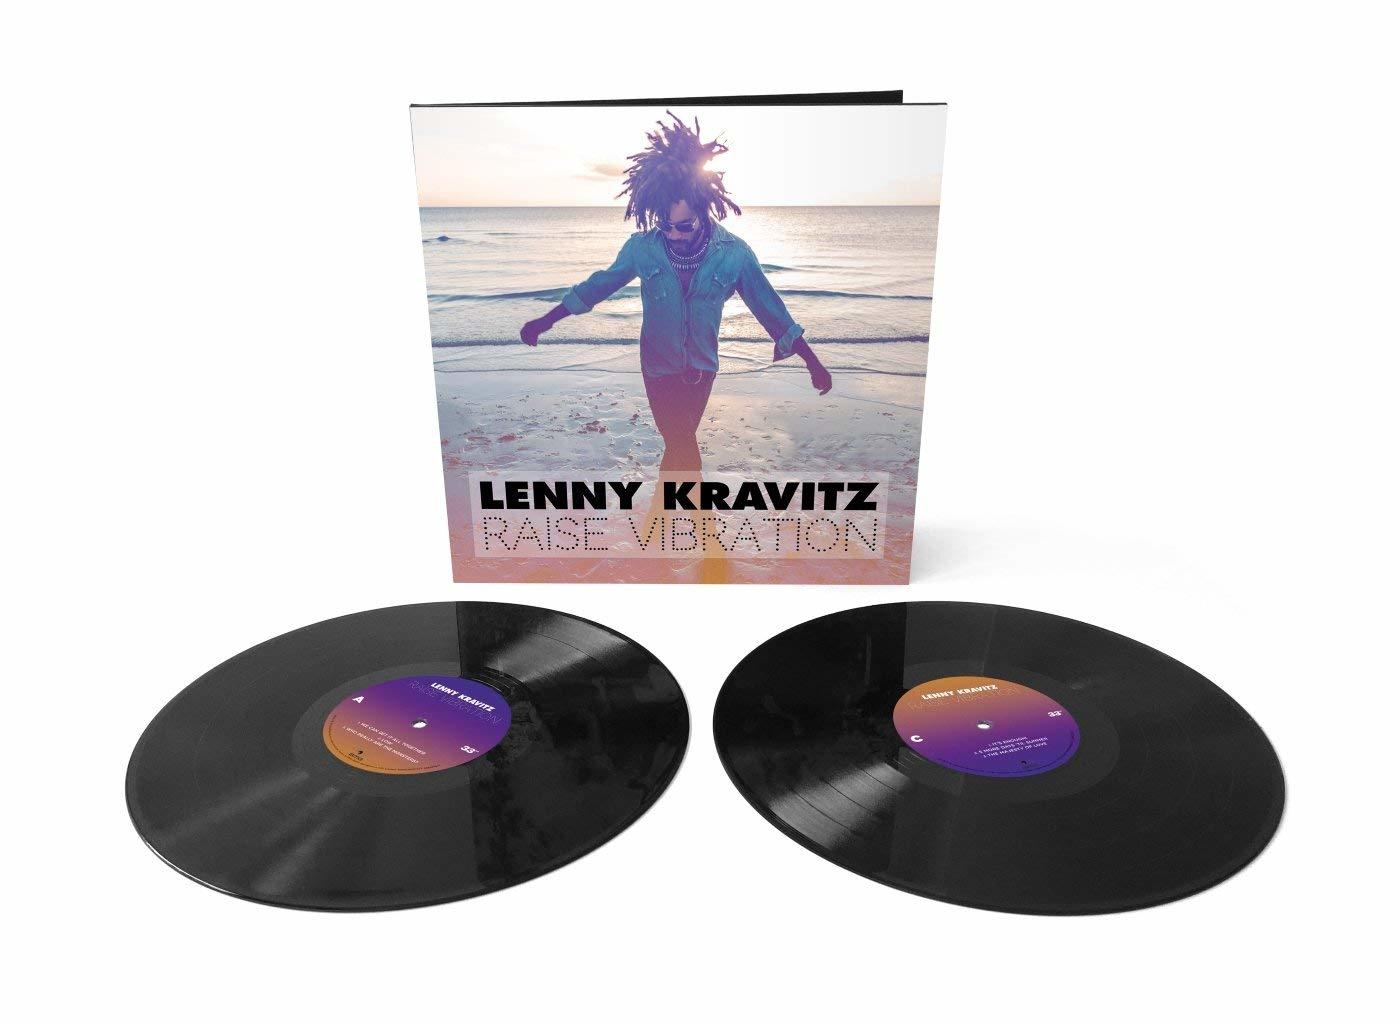 Lenny Kravitz Bonus-CD) (Box (LP CD) - Raise + + - Vibration